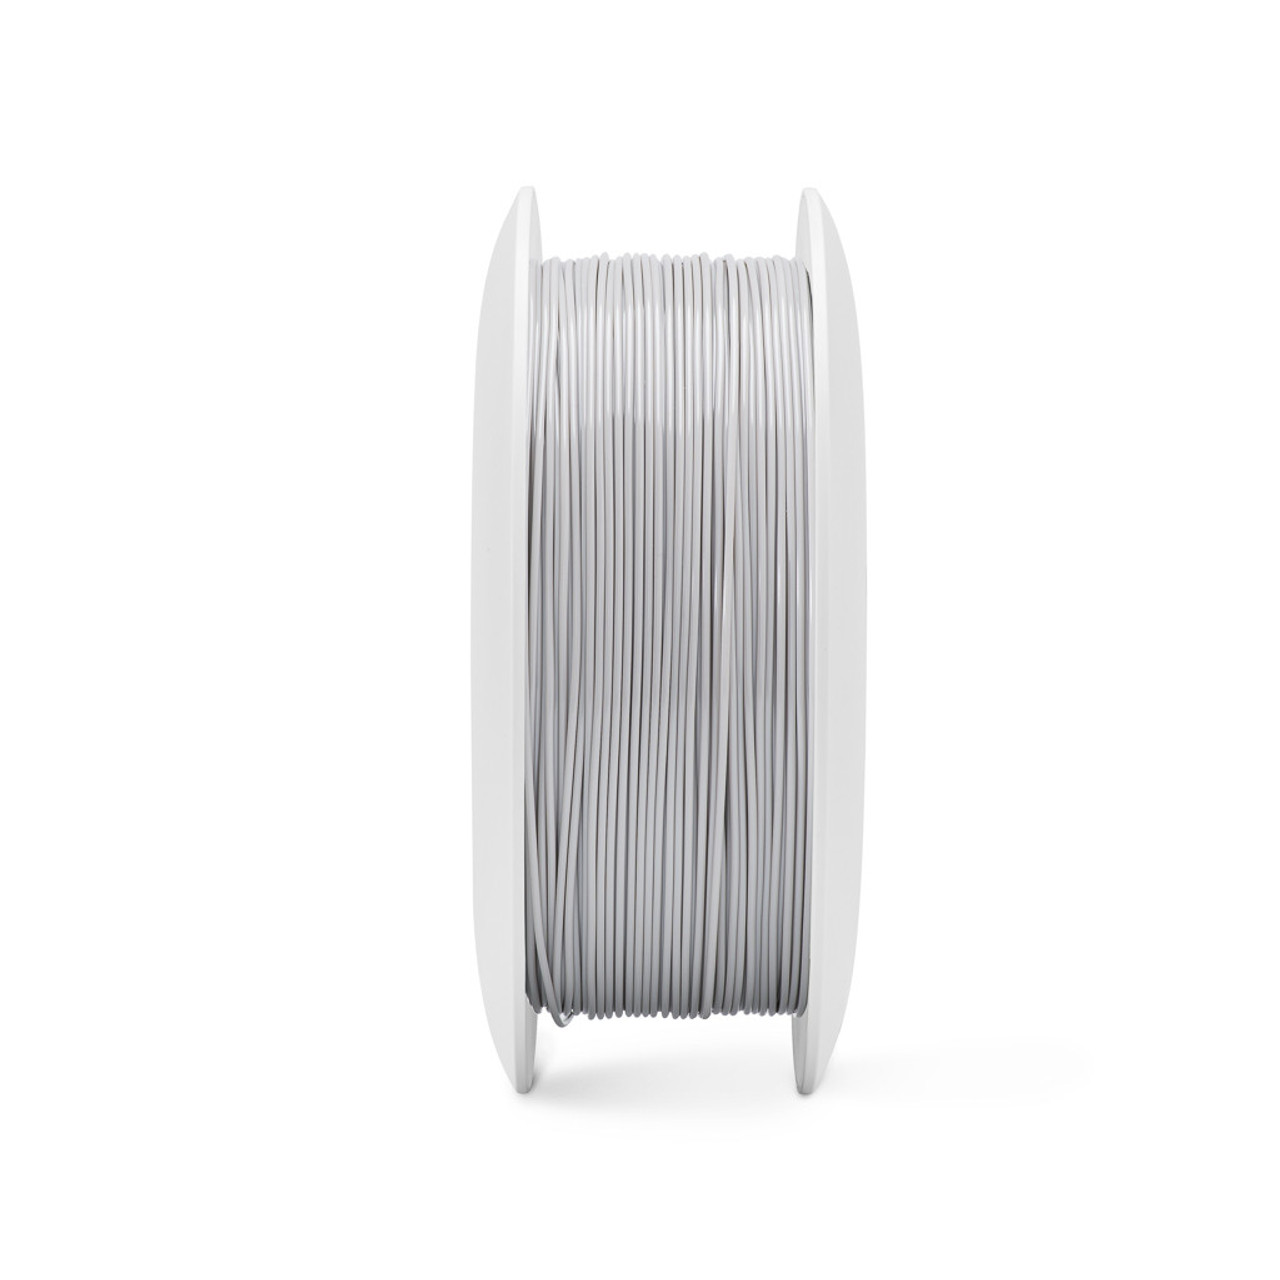 Fiberlogy ABS Gray 2.85mm 3D Printing Filament